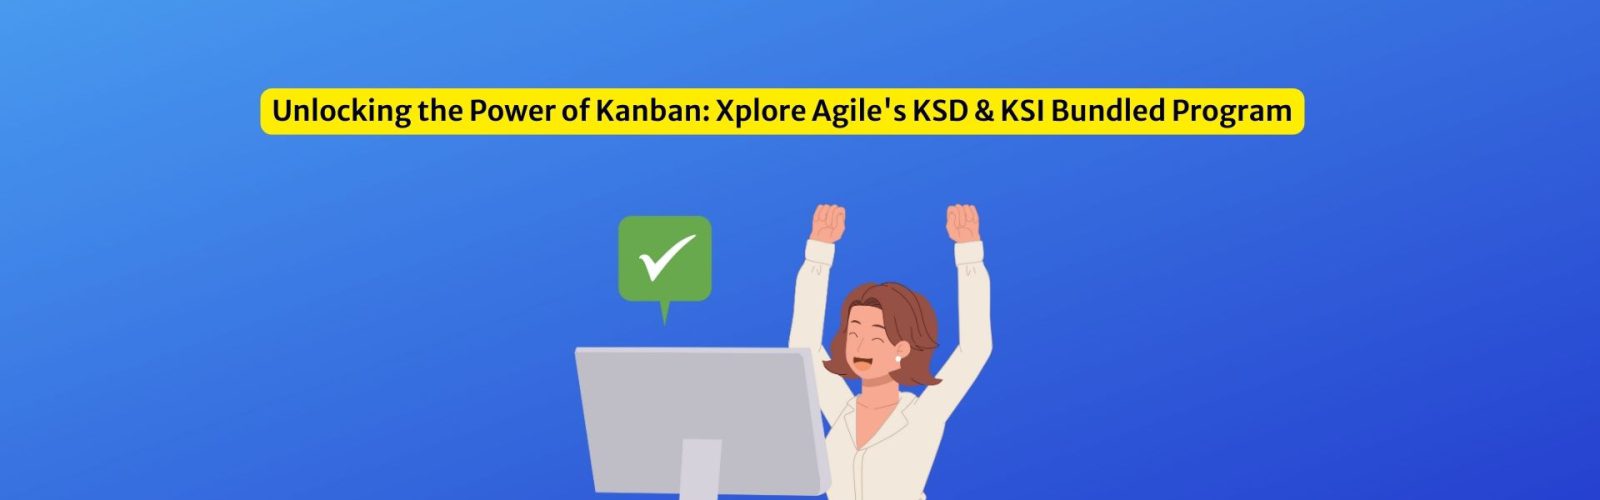 Unlocking the Power of Kanban Xplore Agile's KSD & KSI Bundled Program